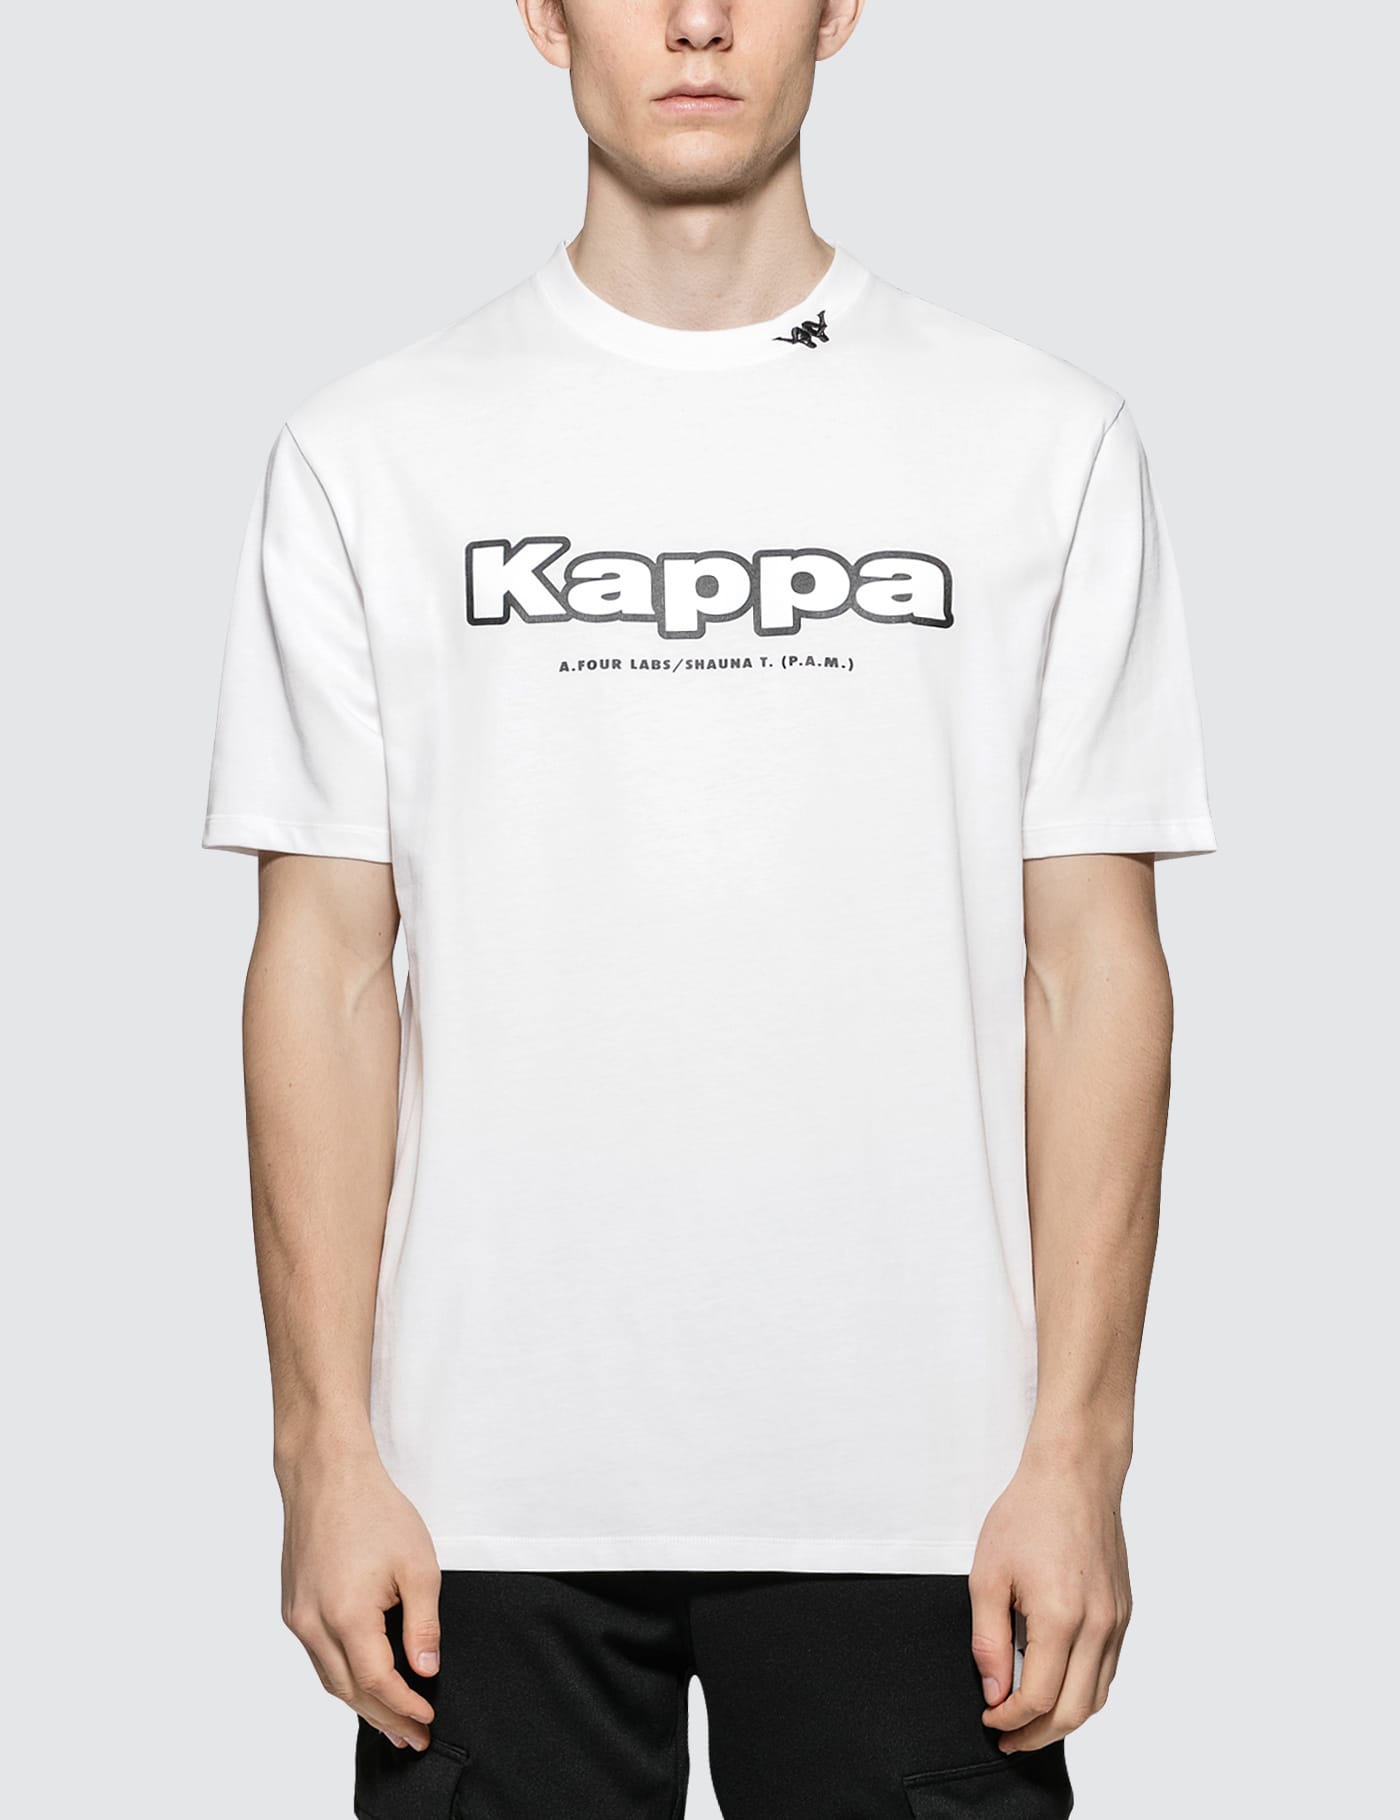 Perks and Mini - P.A.M. x A.Four Labs x Kappa T-Shirt 1 | HBX